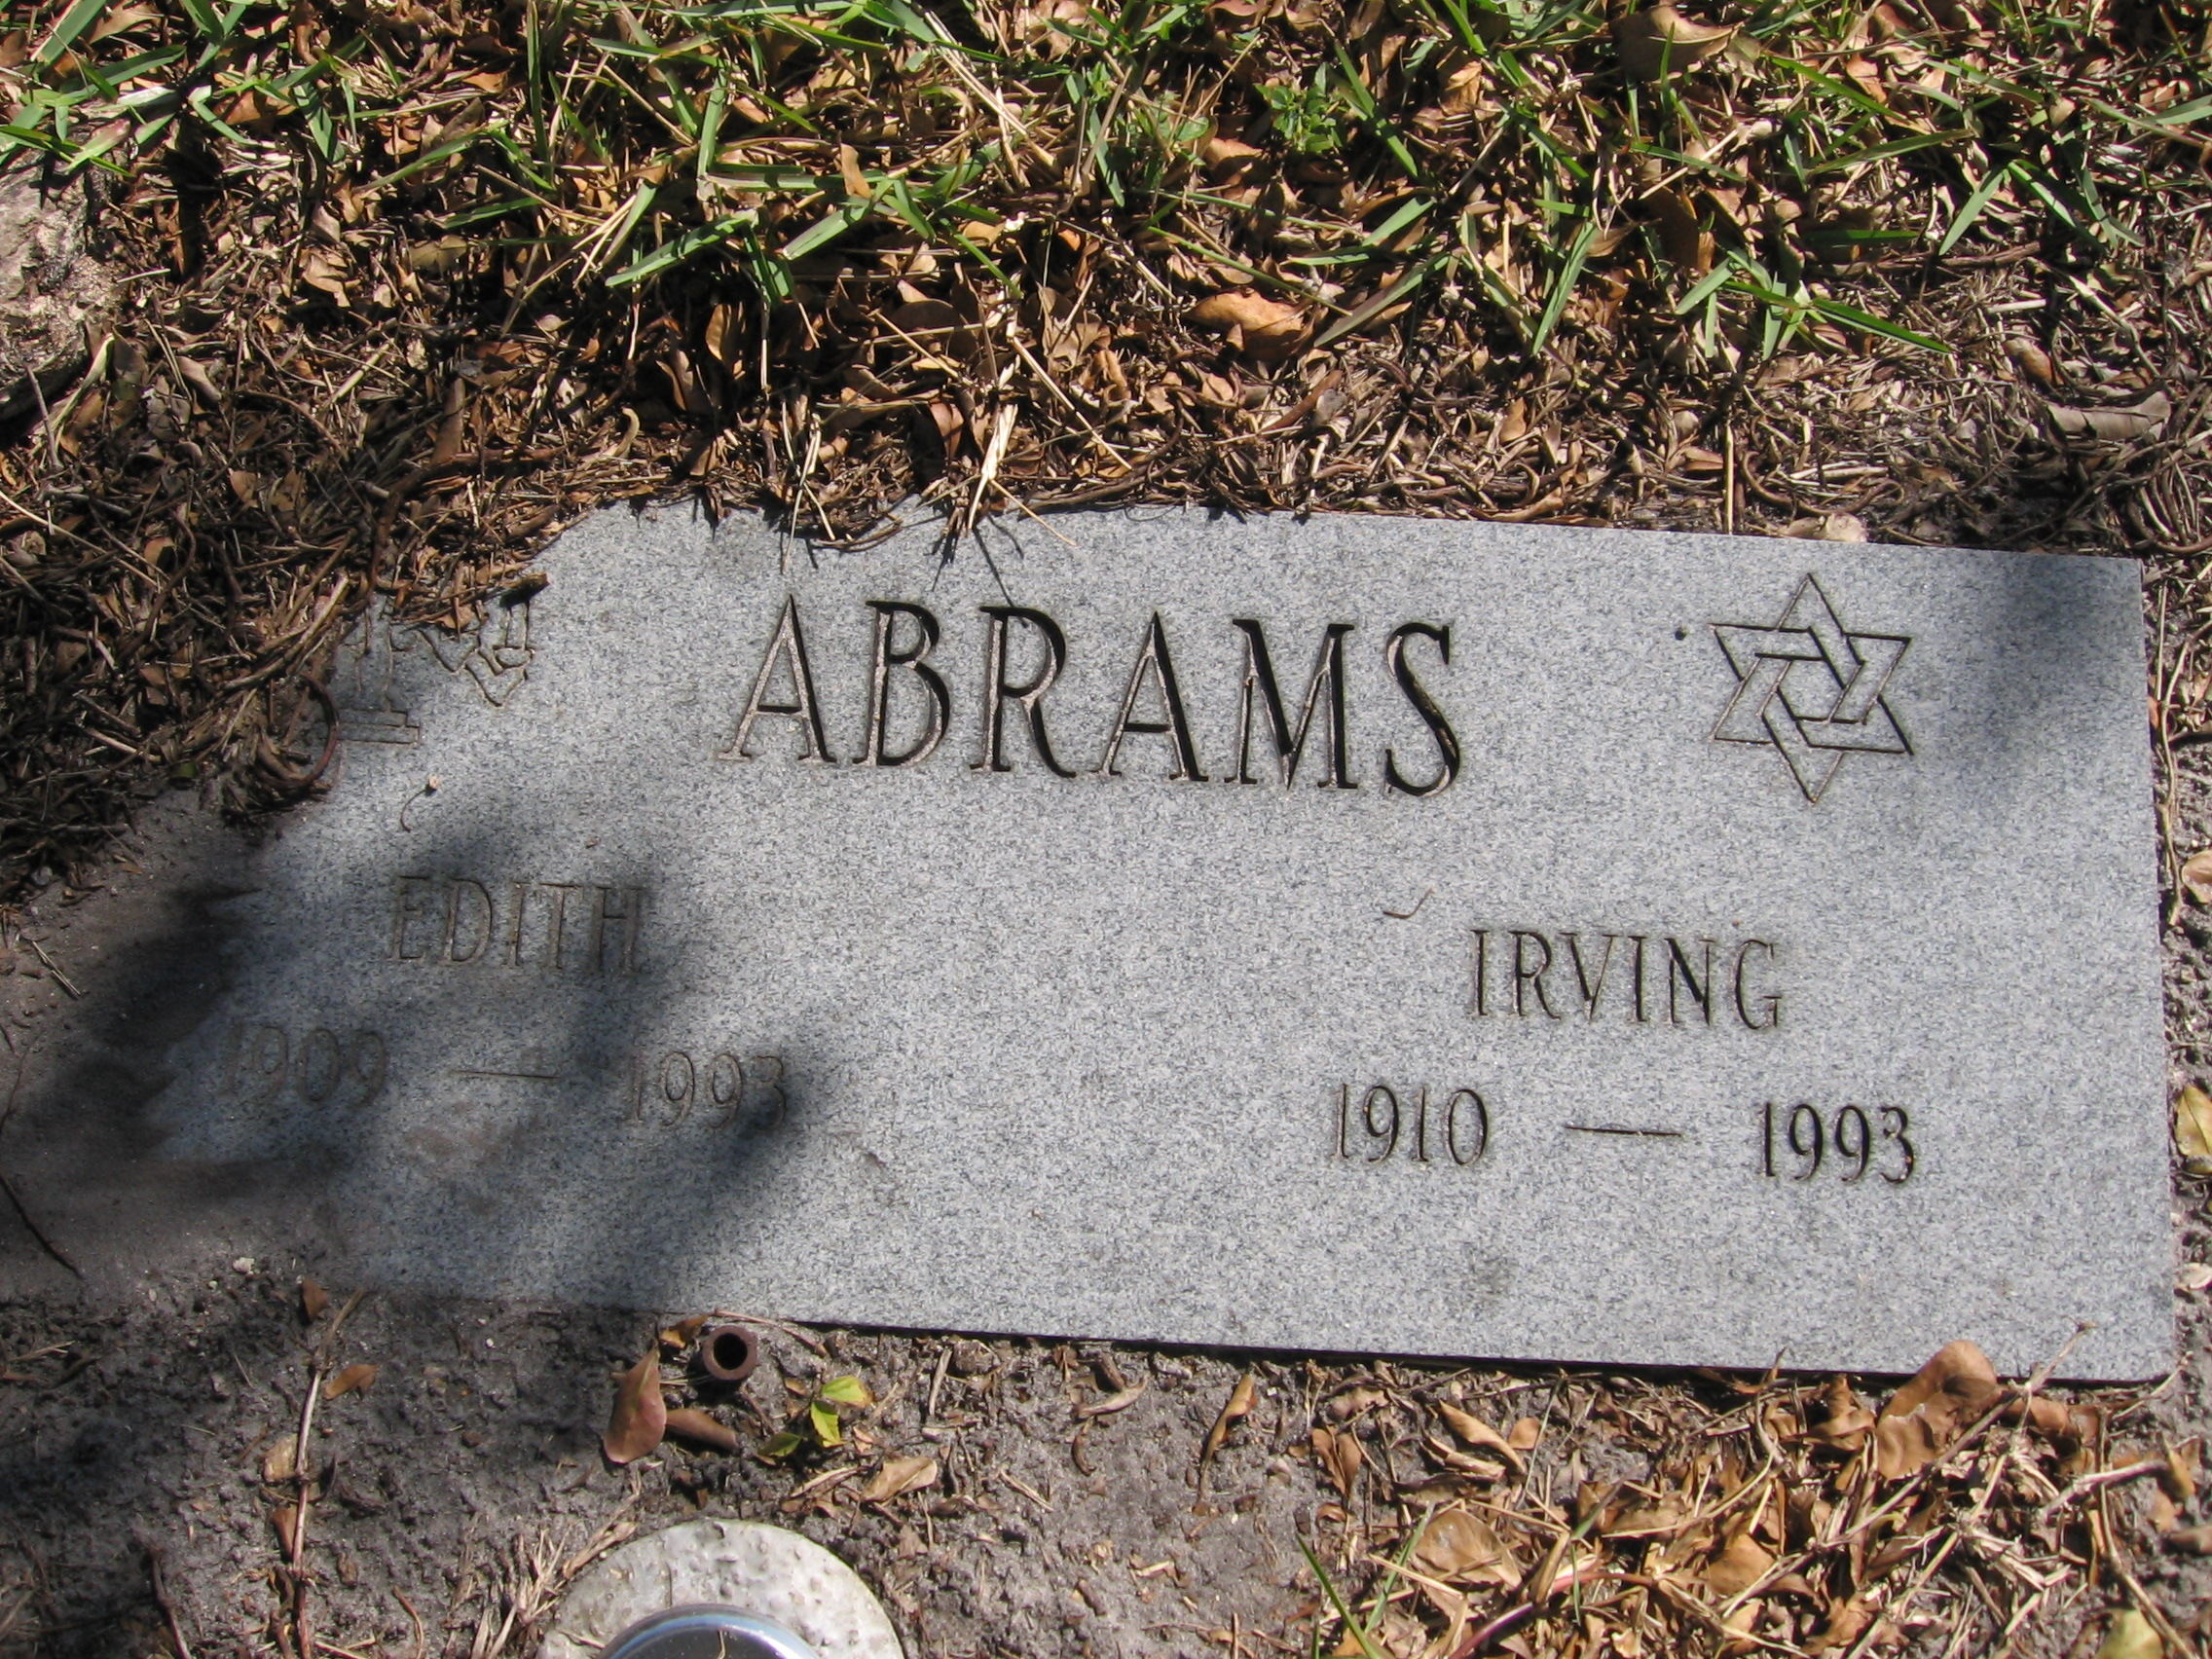 Irving Abrams